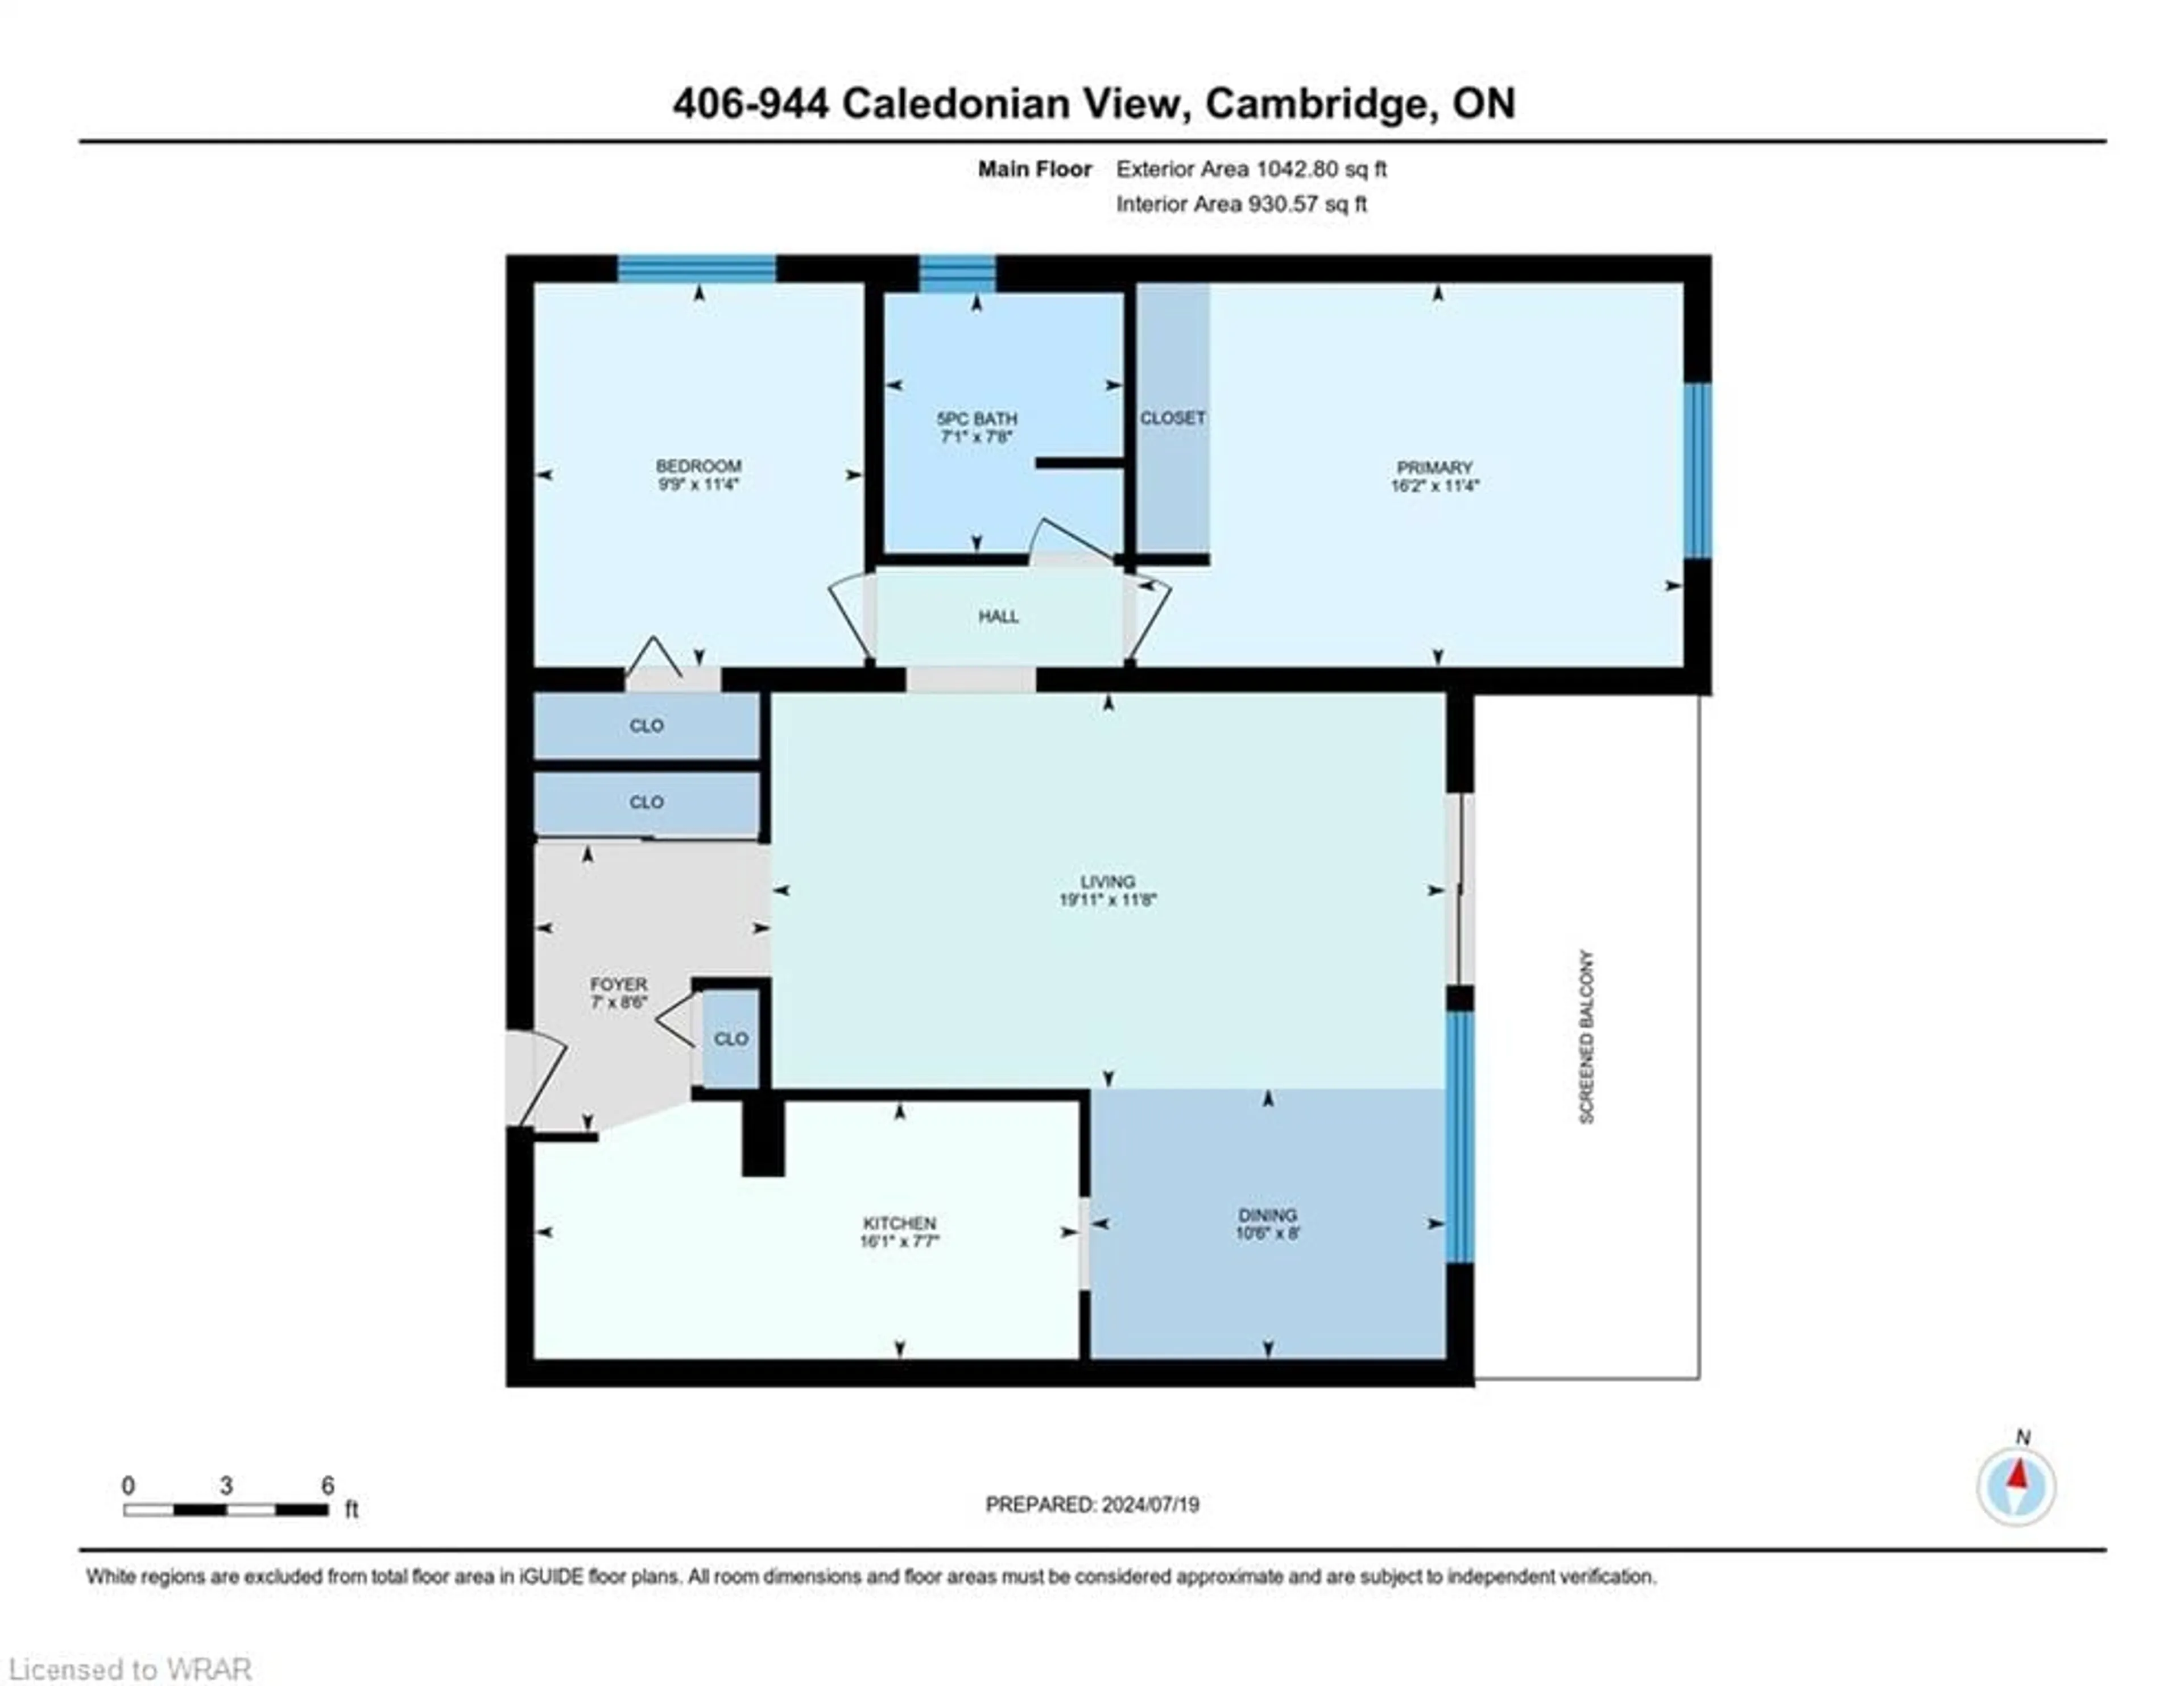 Floor plan for 944 Caledonian View #406, Cambridge Ontario N3H 1A5